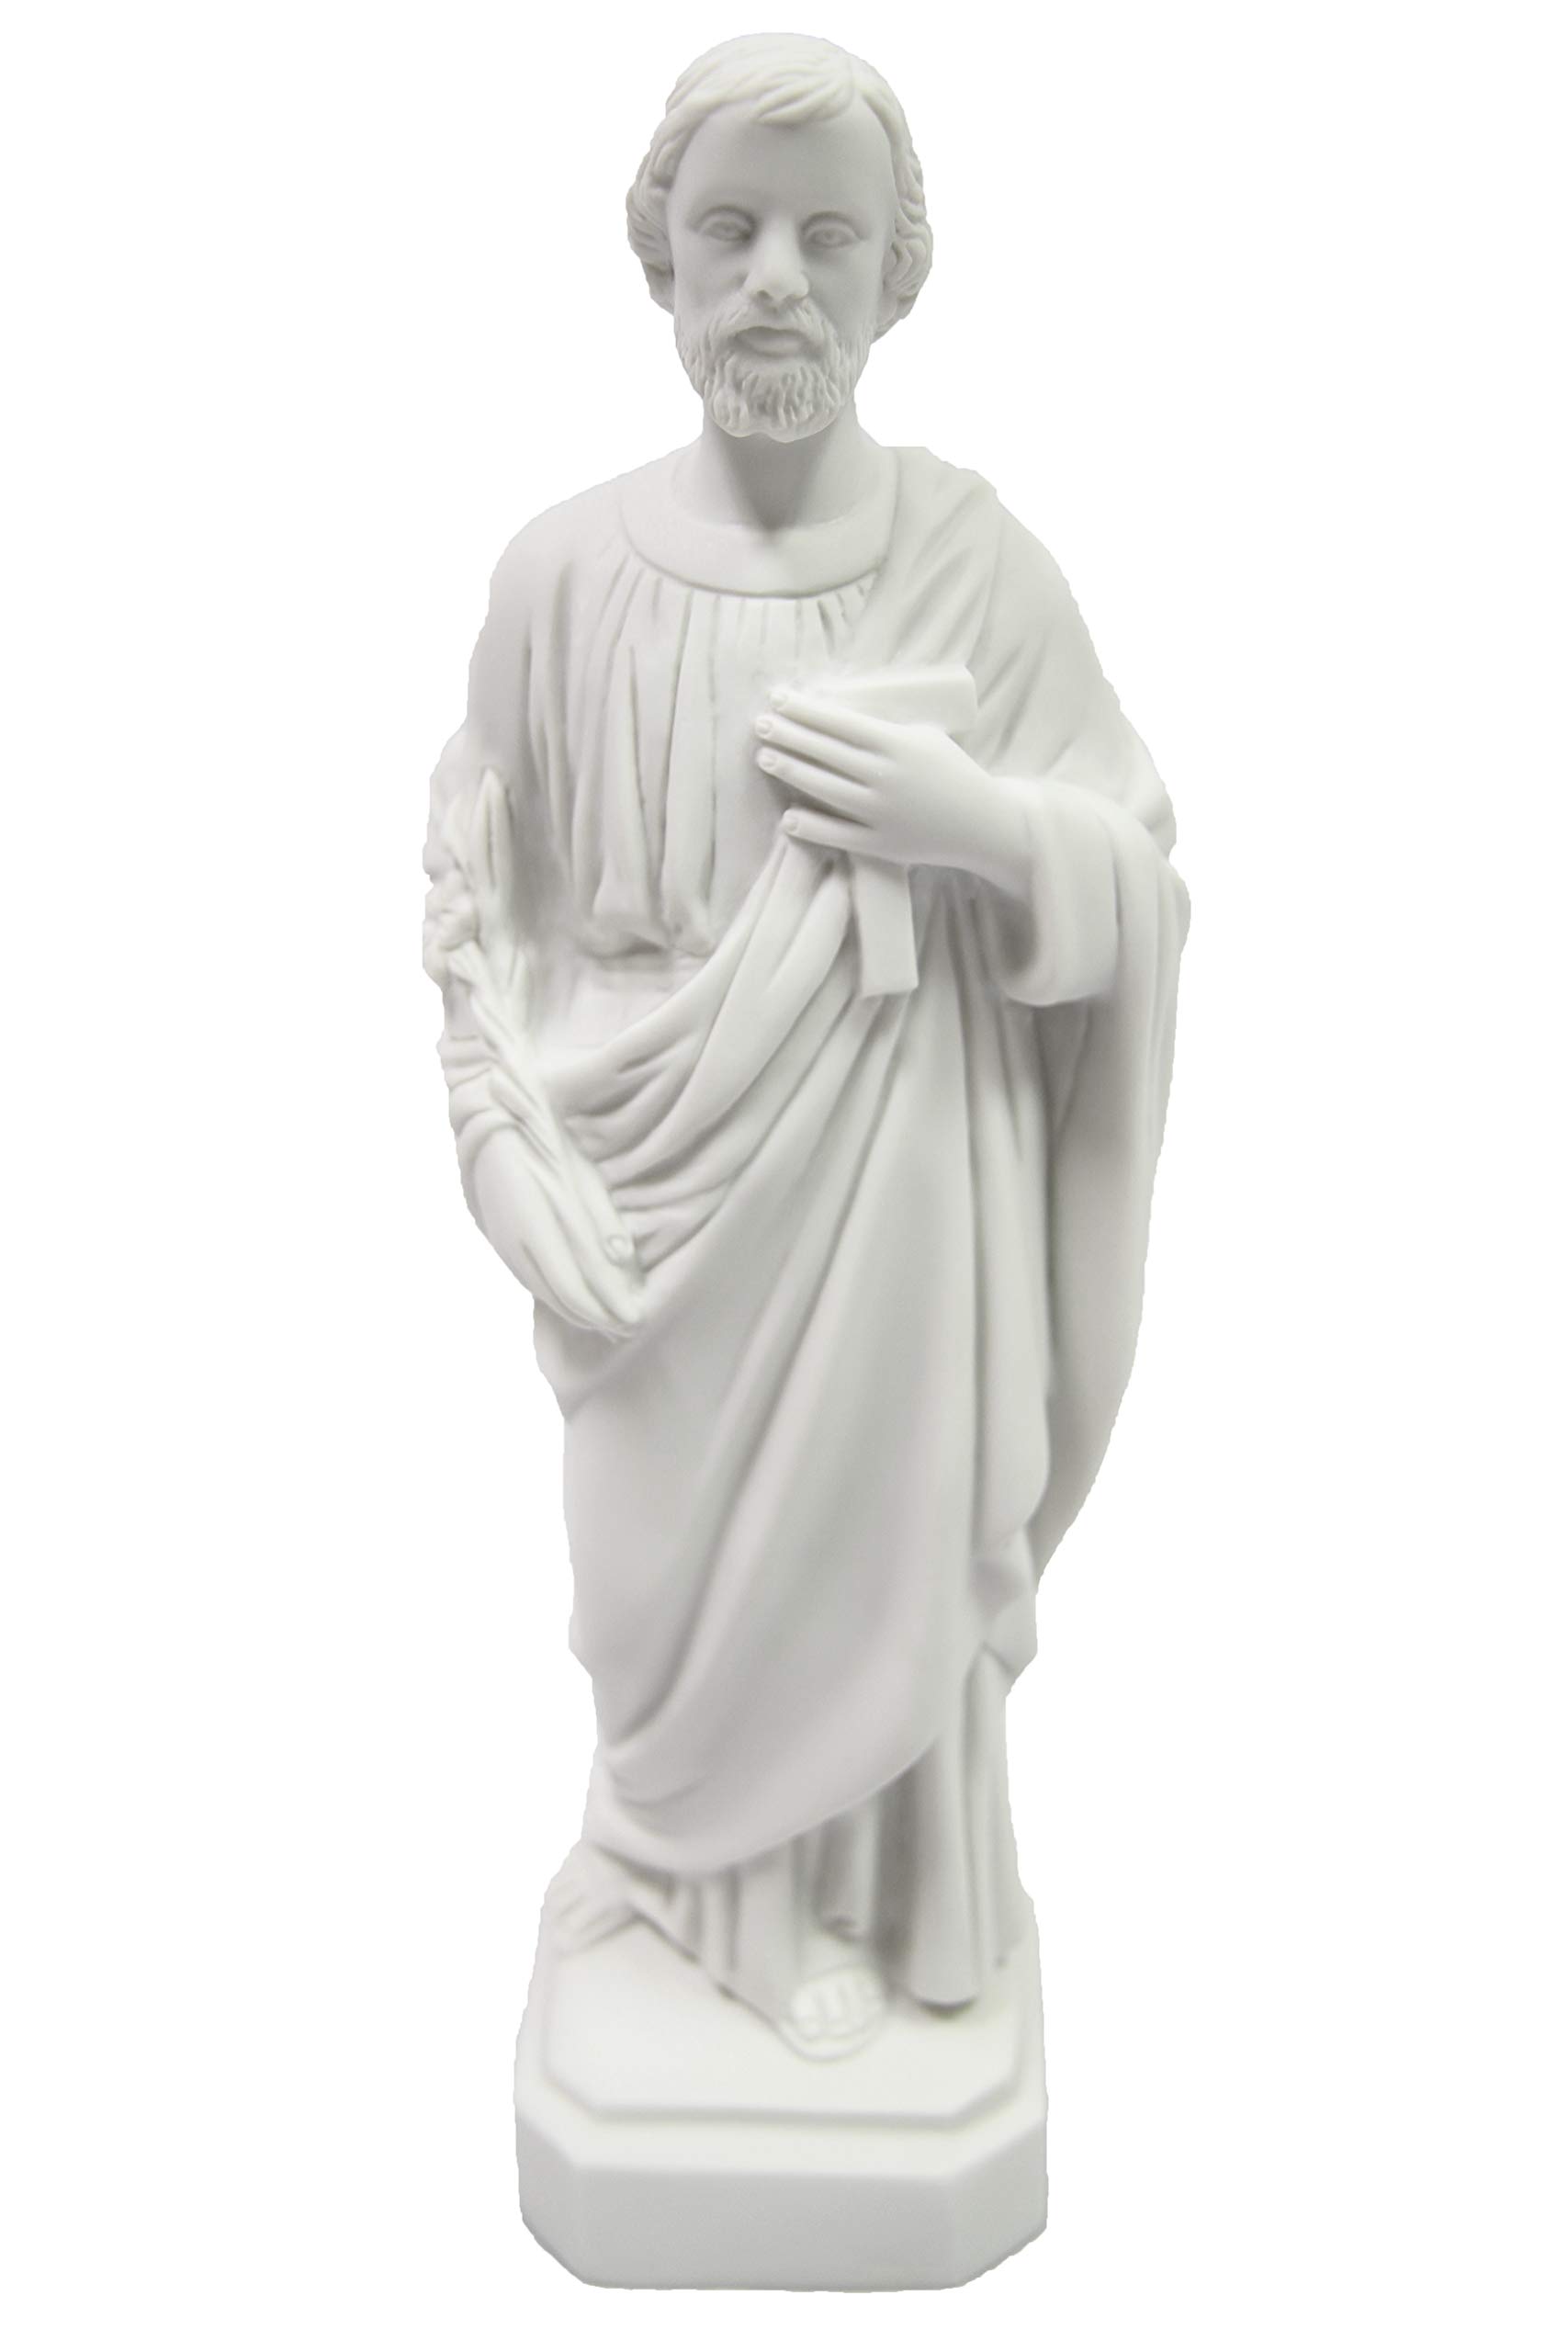 Vittoria Collection 12 Inch Saint St Joseph The Worker Statue Sculpture Figurine Made in Italy Indoor Outdoor Garden